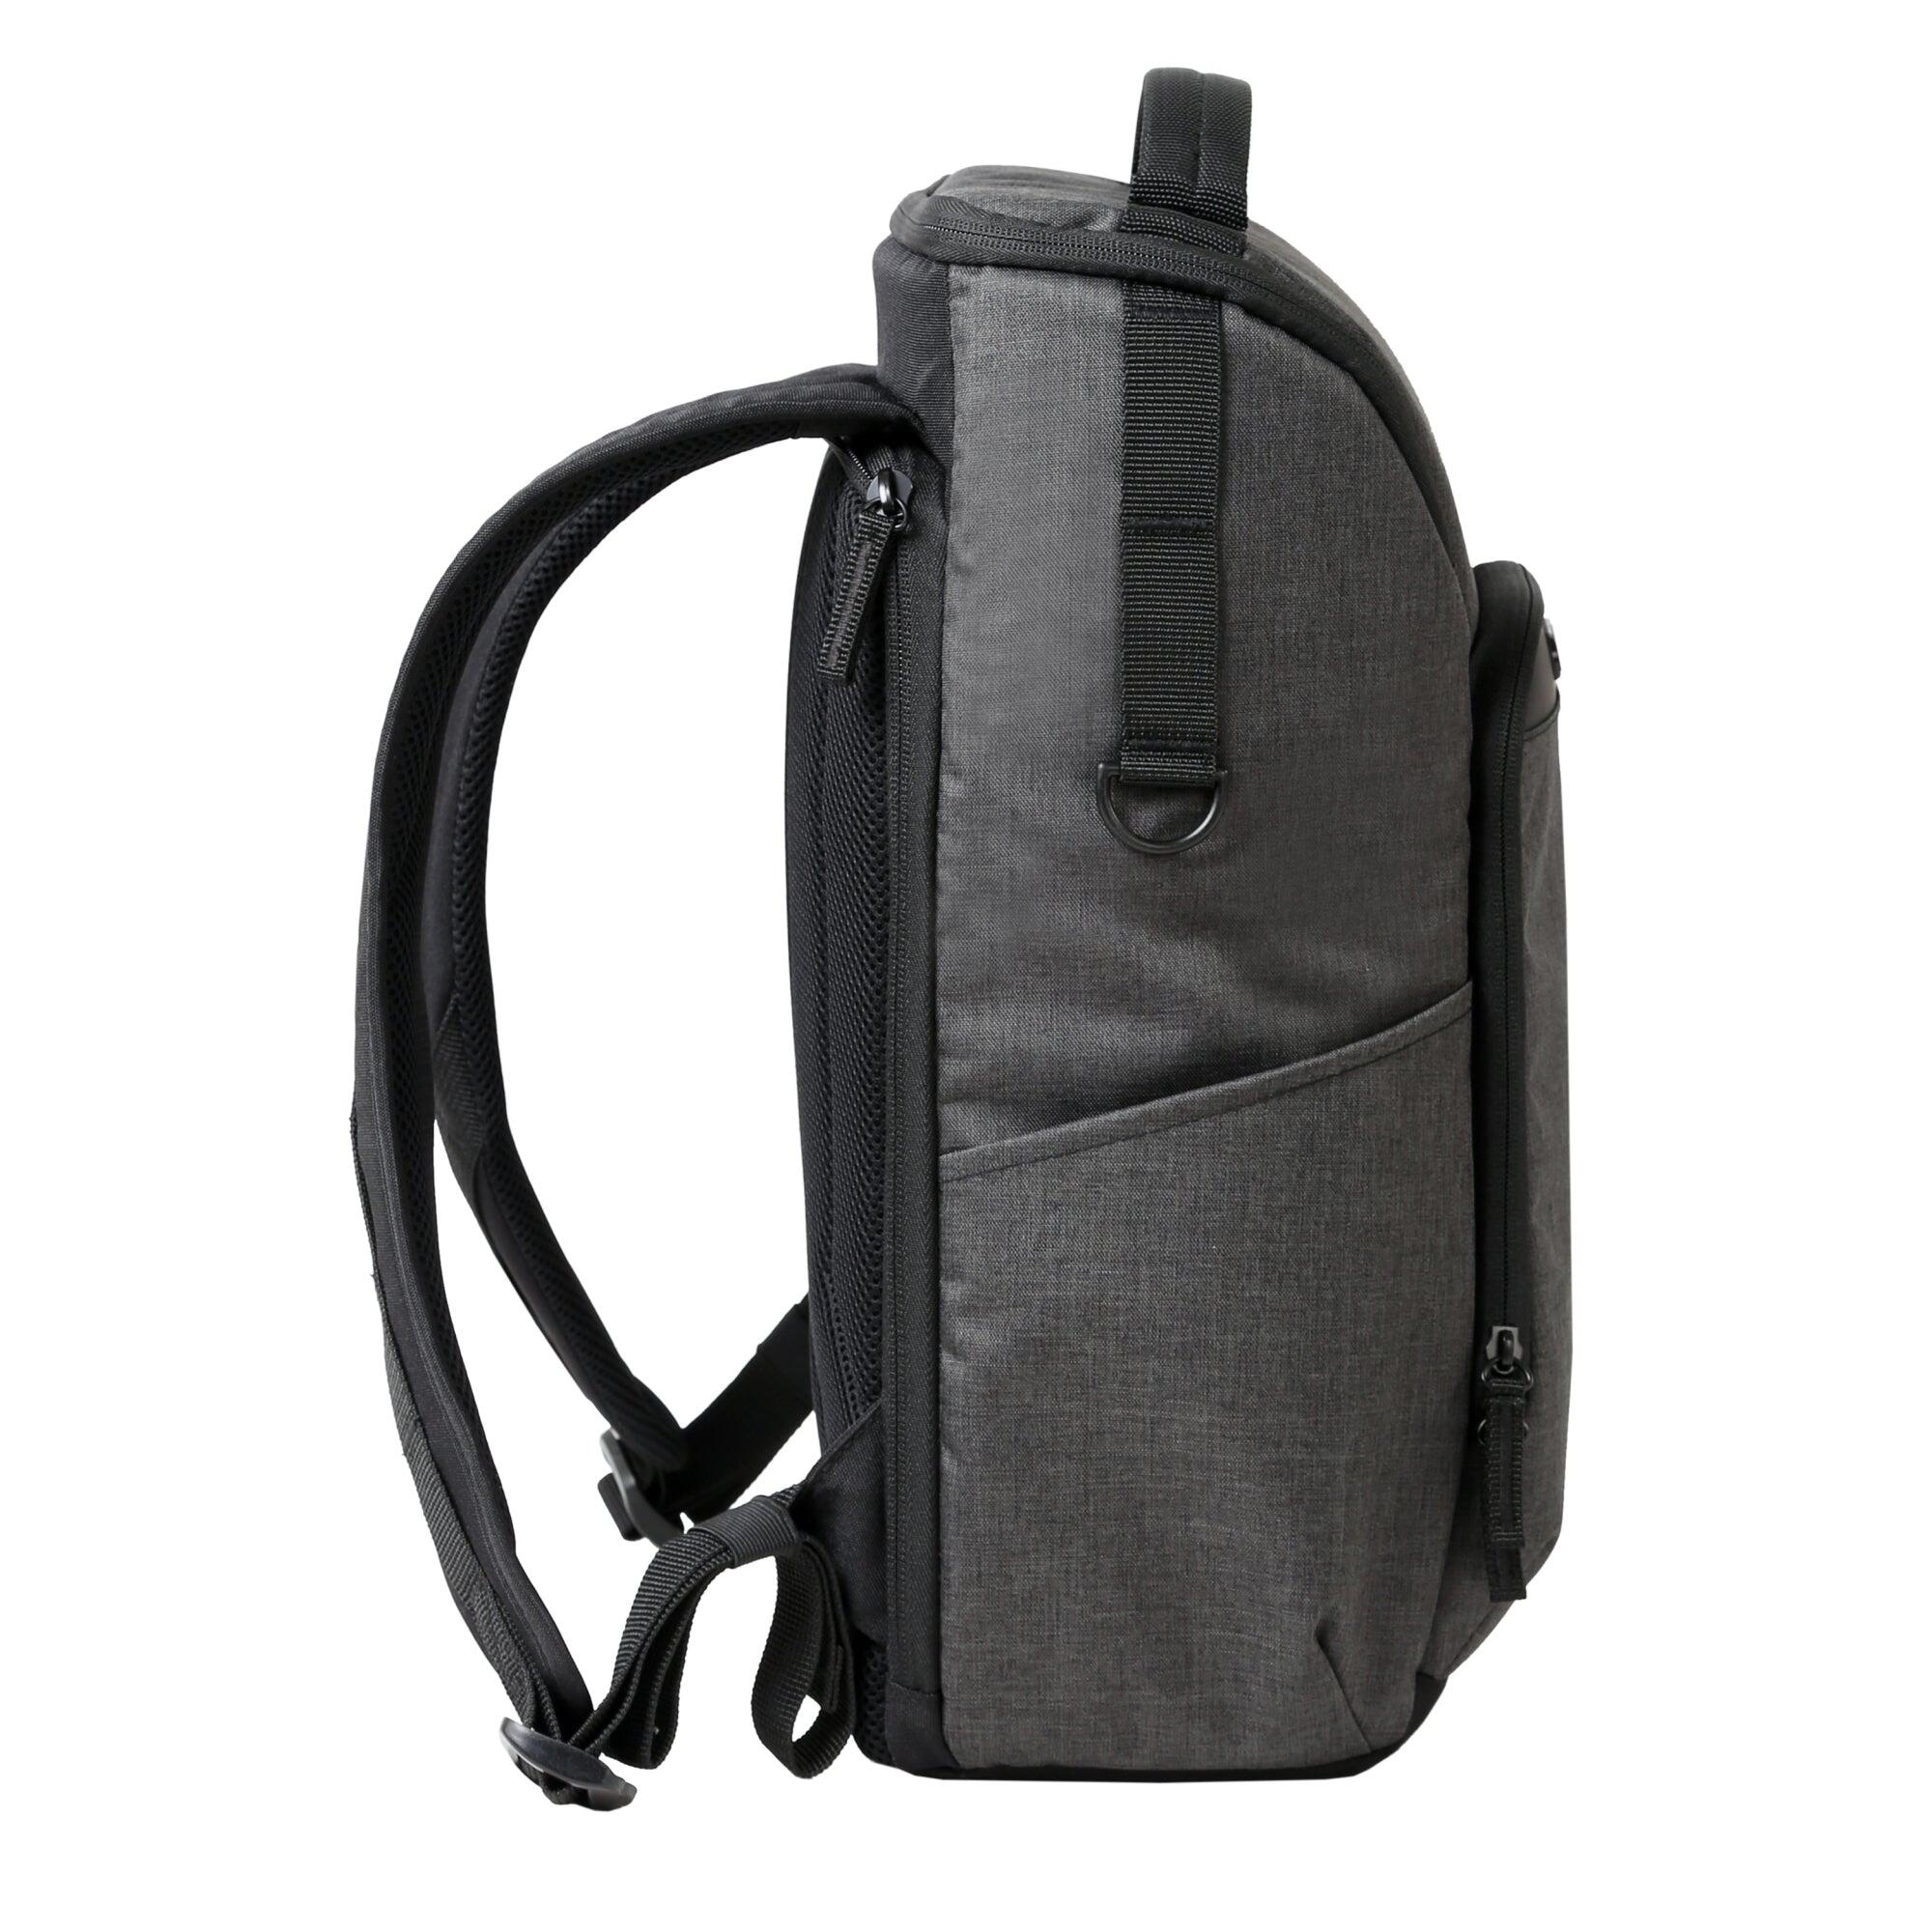 VESTA Aspire 41 GY Camera Backpack - Grey 1/5